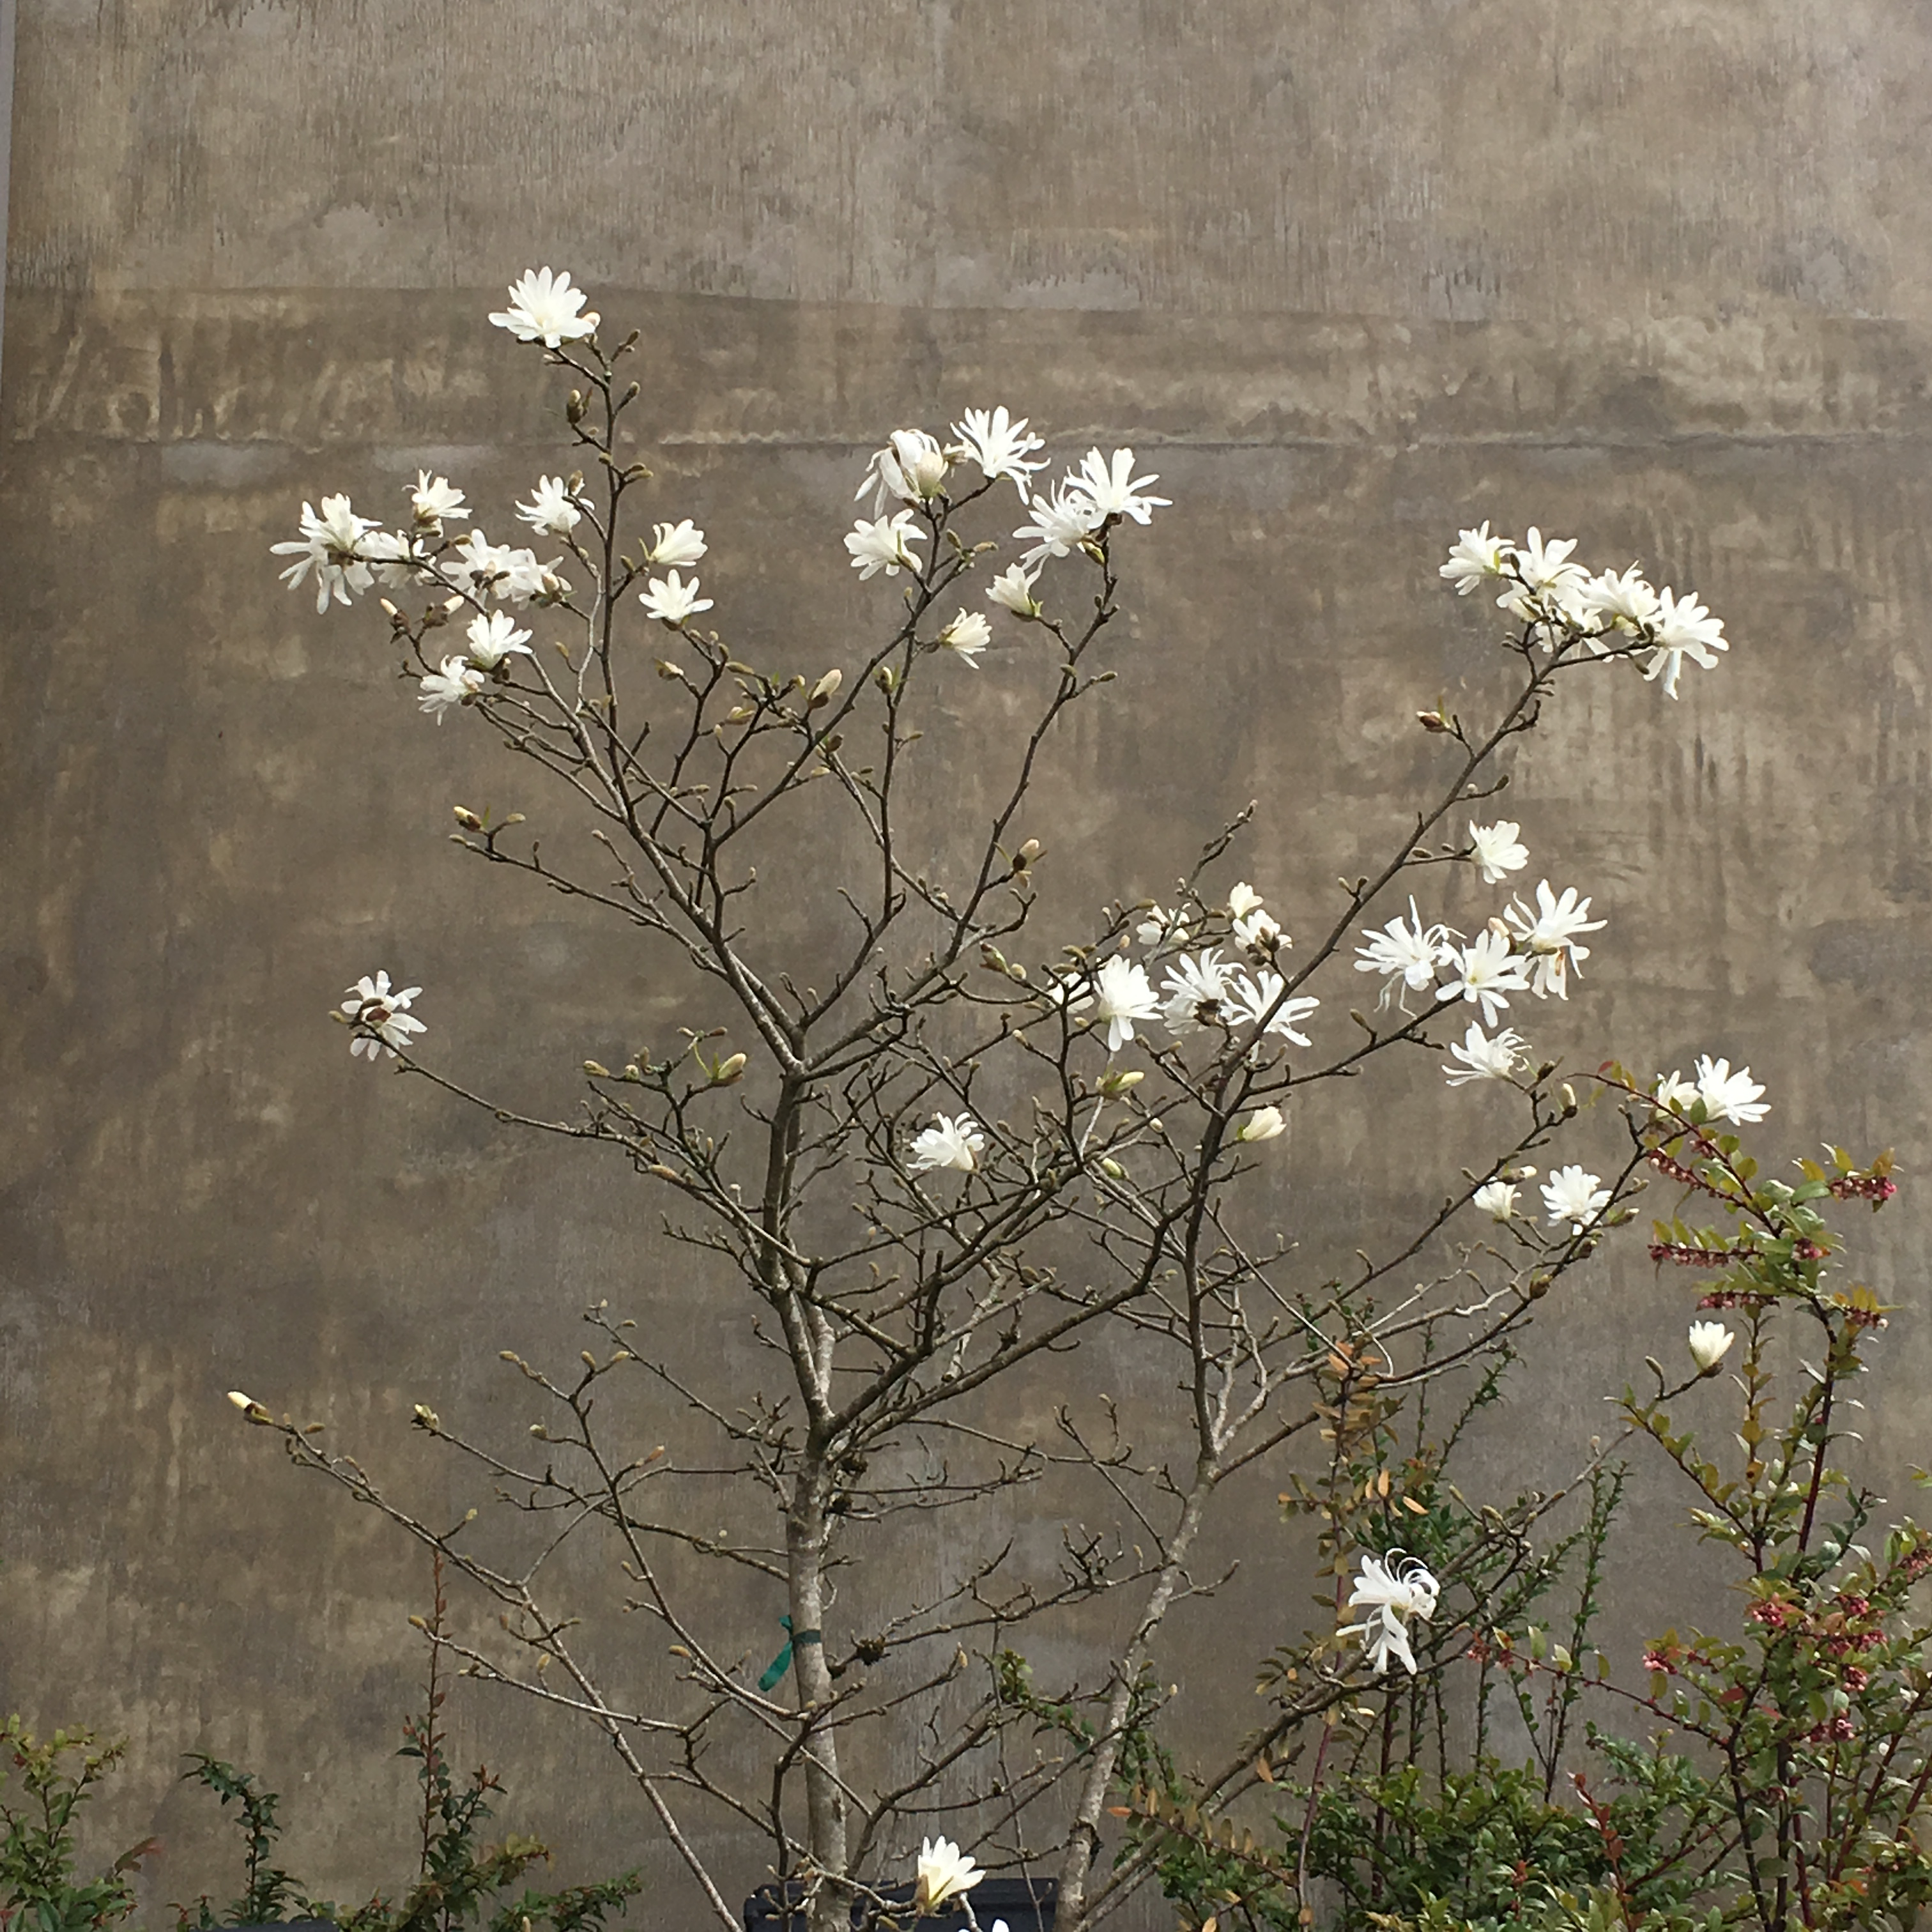 concrete wall, white blossoms on tree